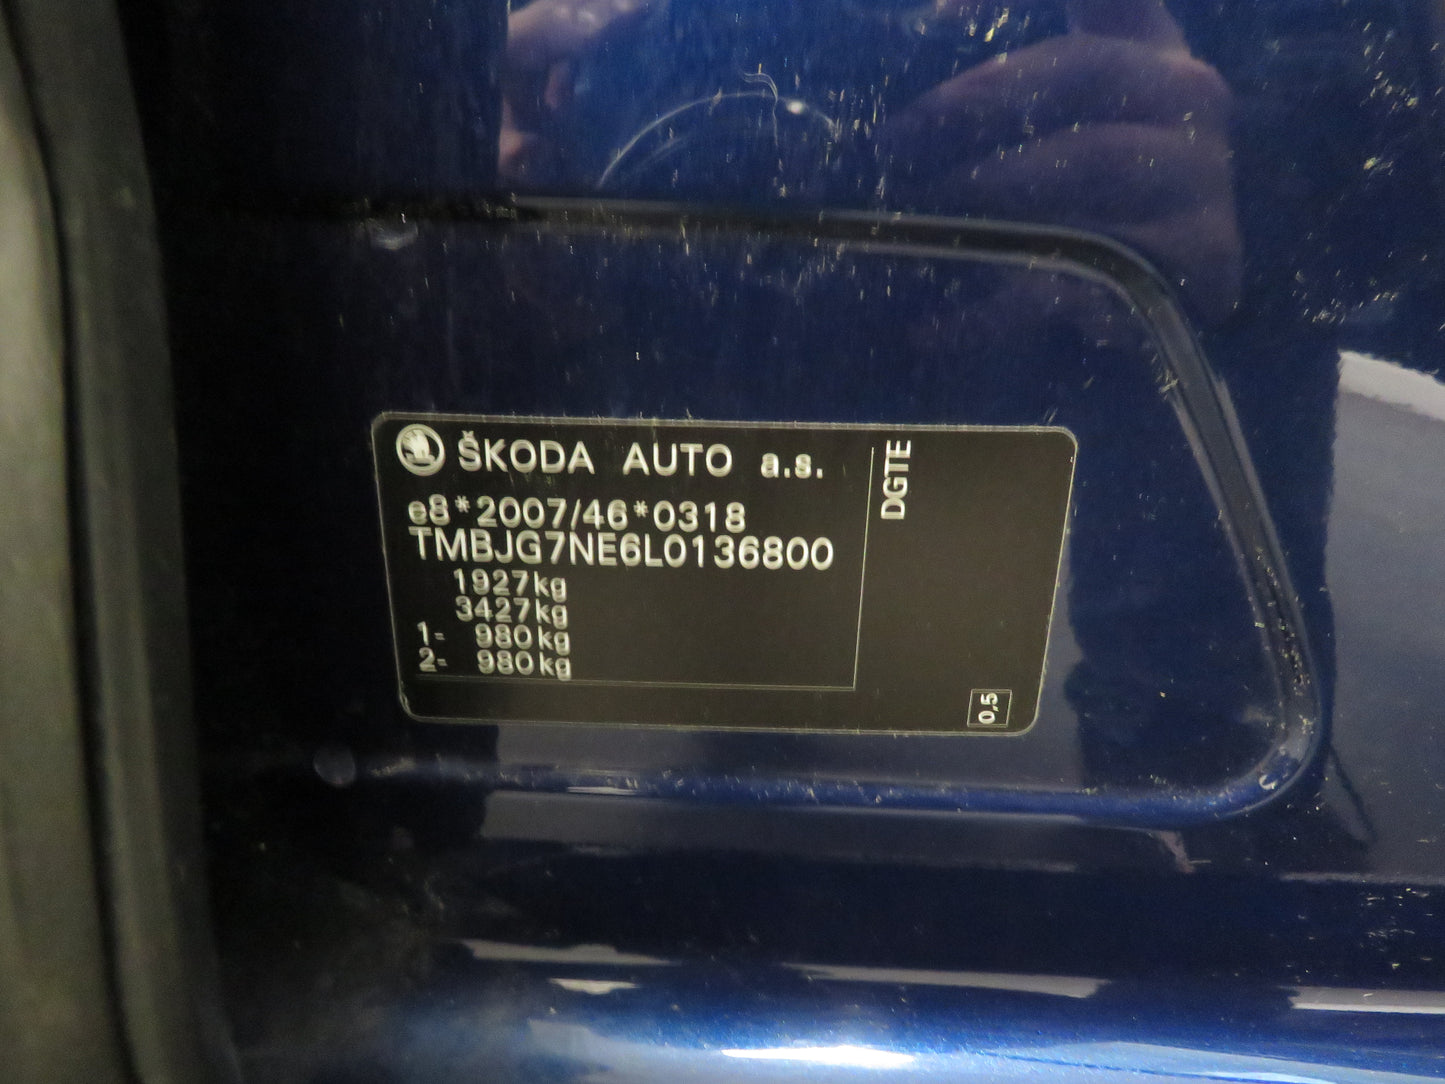 Škoda Octavia 1.6 TDI Style